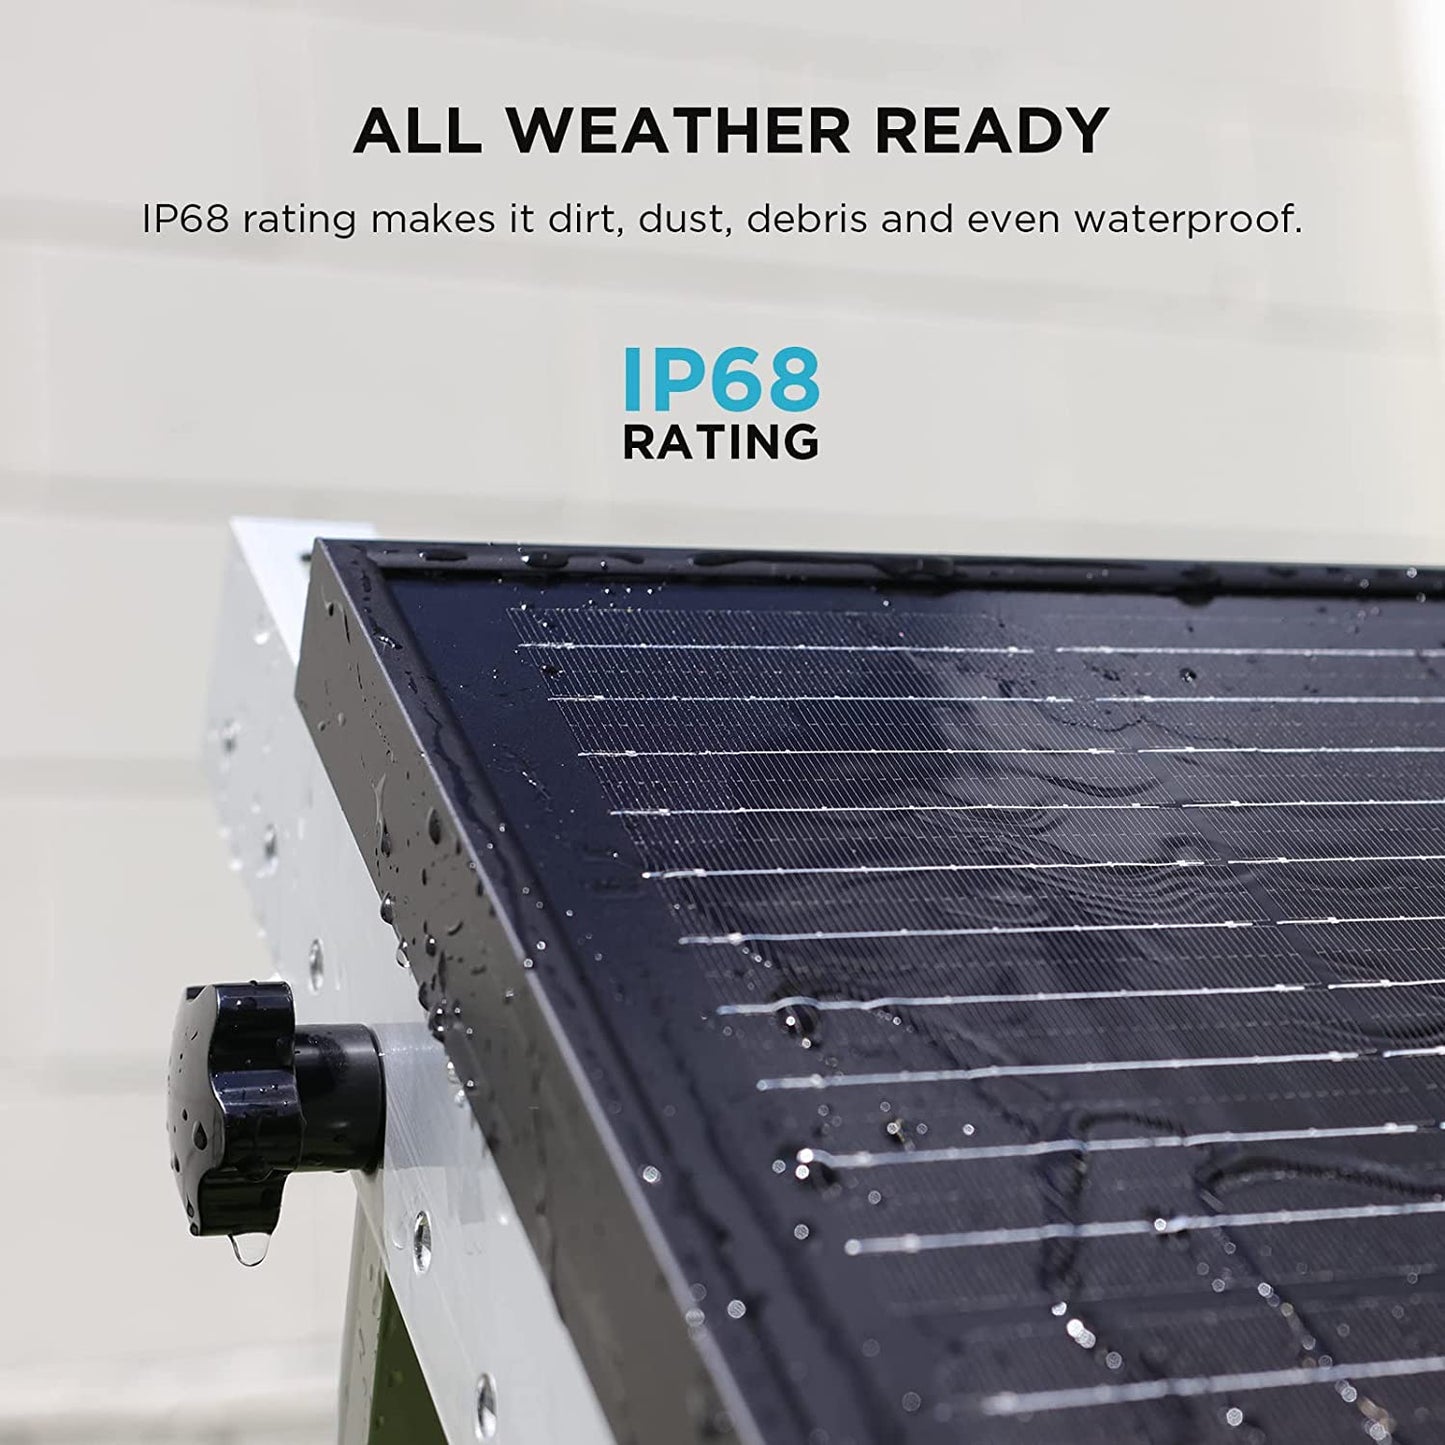 IP68 rating makes it dirt, dust, debris and even waterproof: